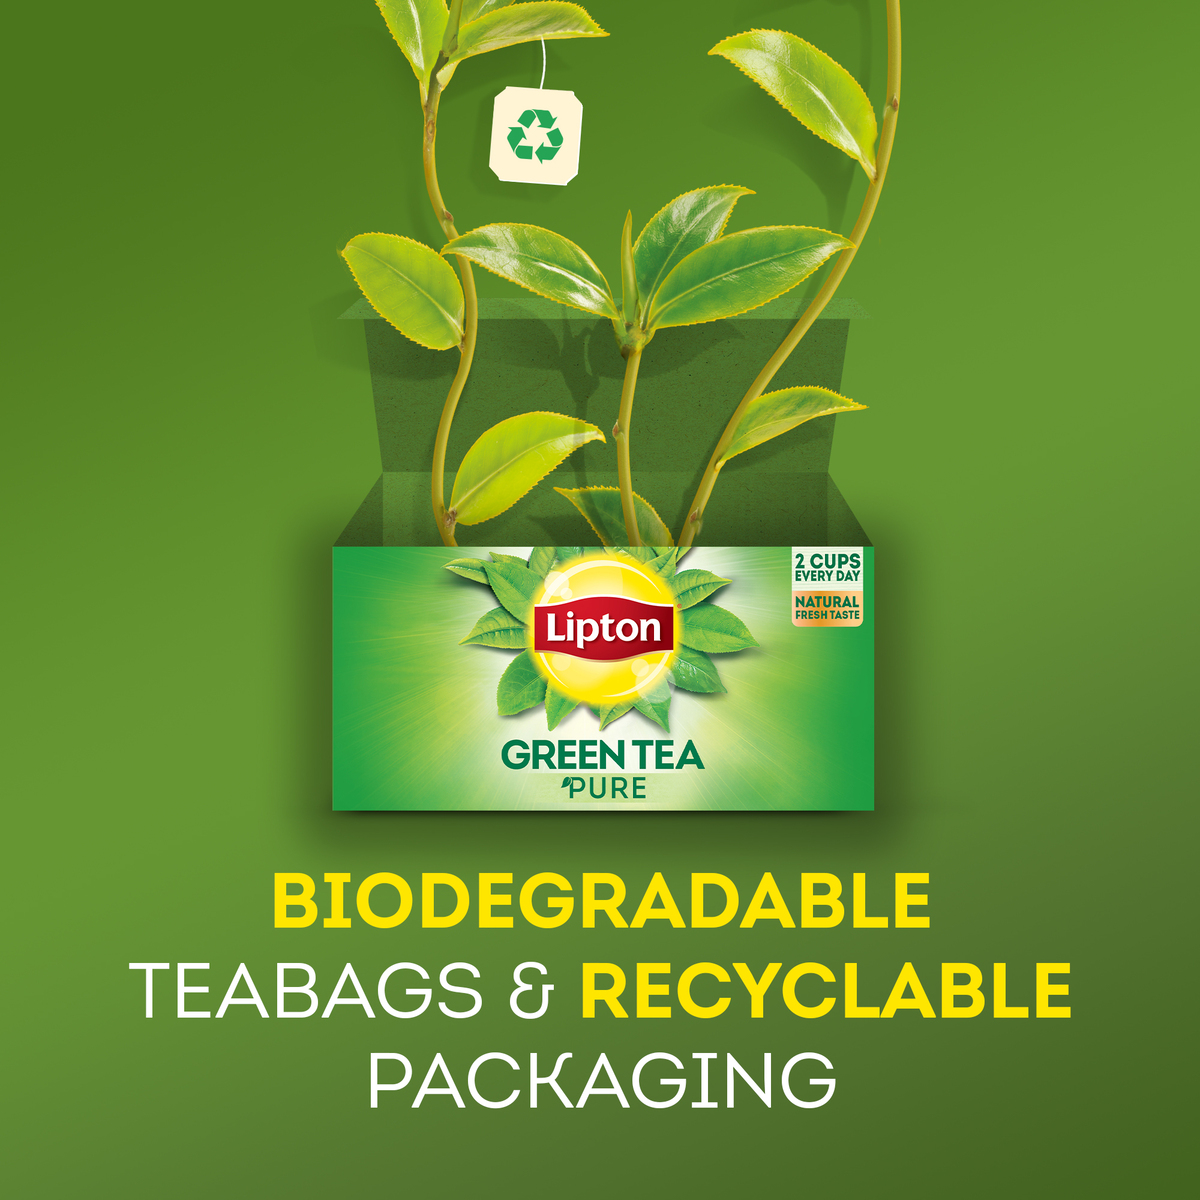 Lipton Green Tea Mint Envelope 50 Teabags